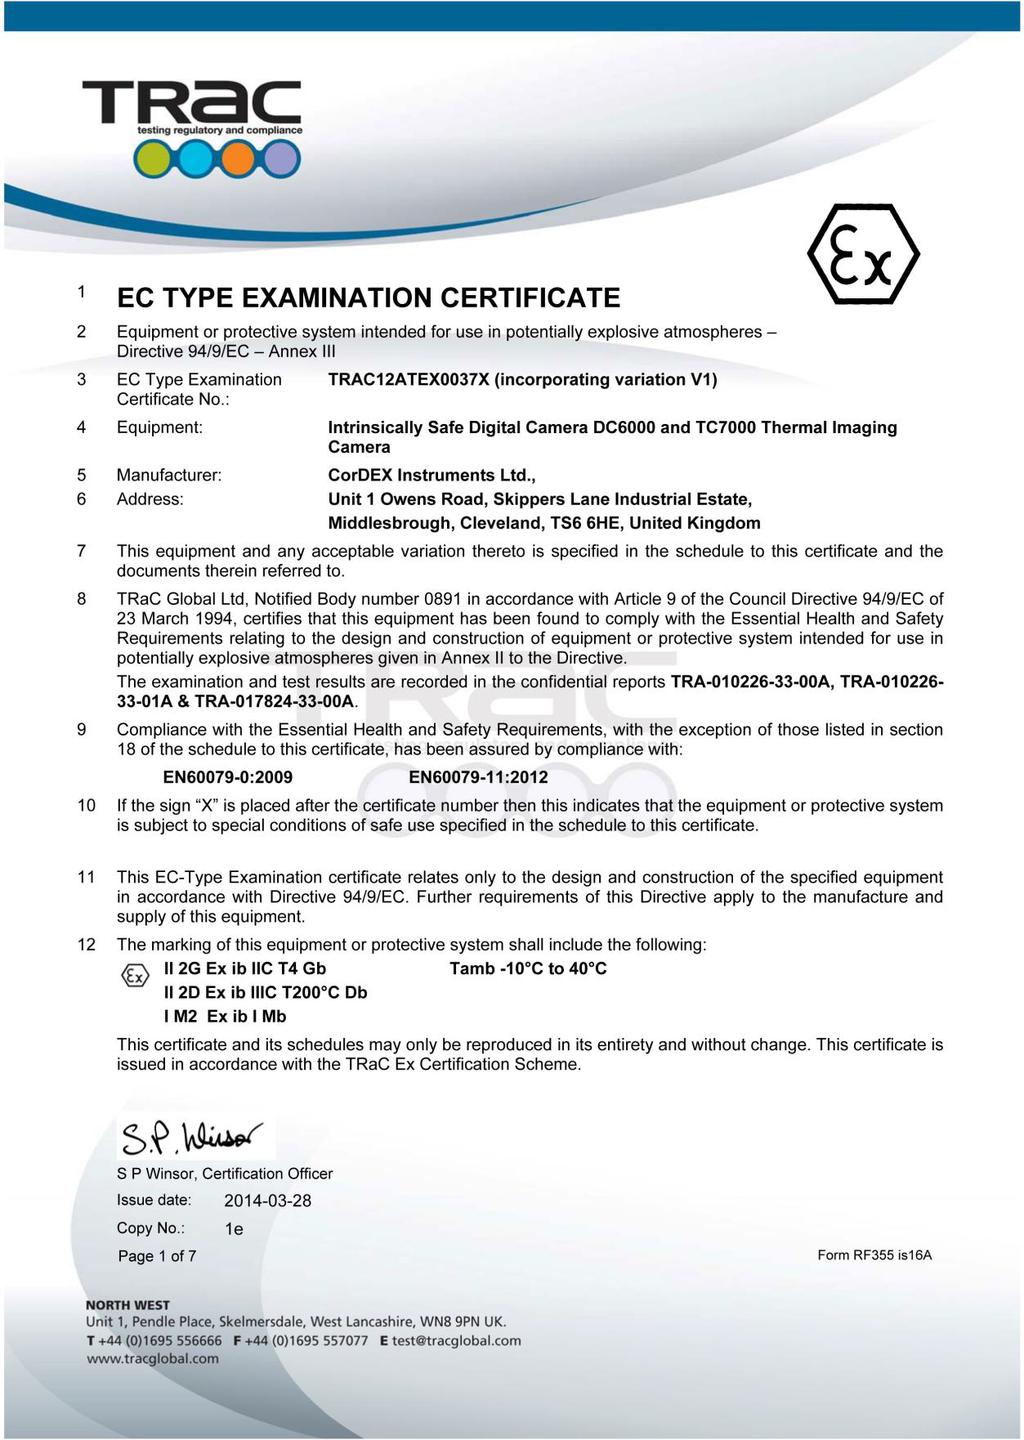 Certificate Information ATEX / IECEx Certificate No TRACATEX007X / IECEx TRC.